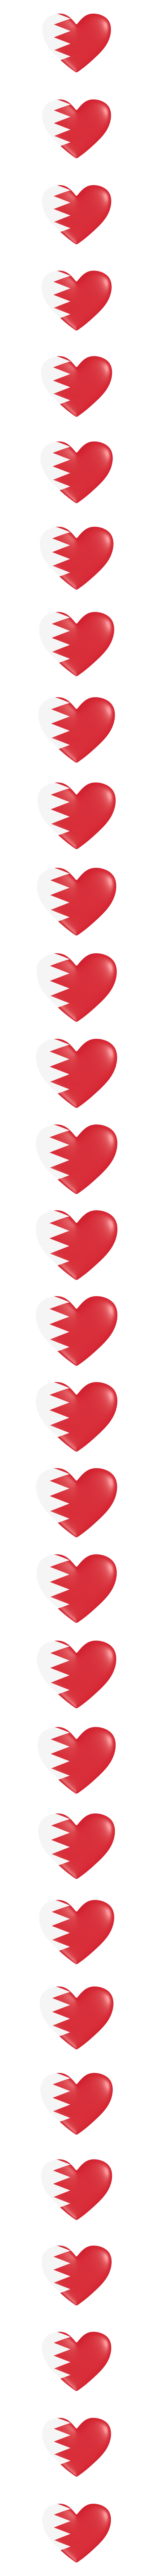 Bahrain heart